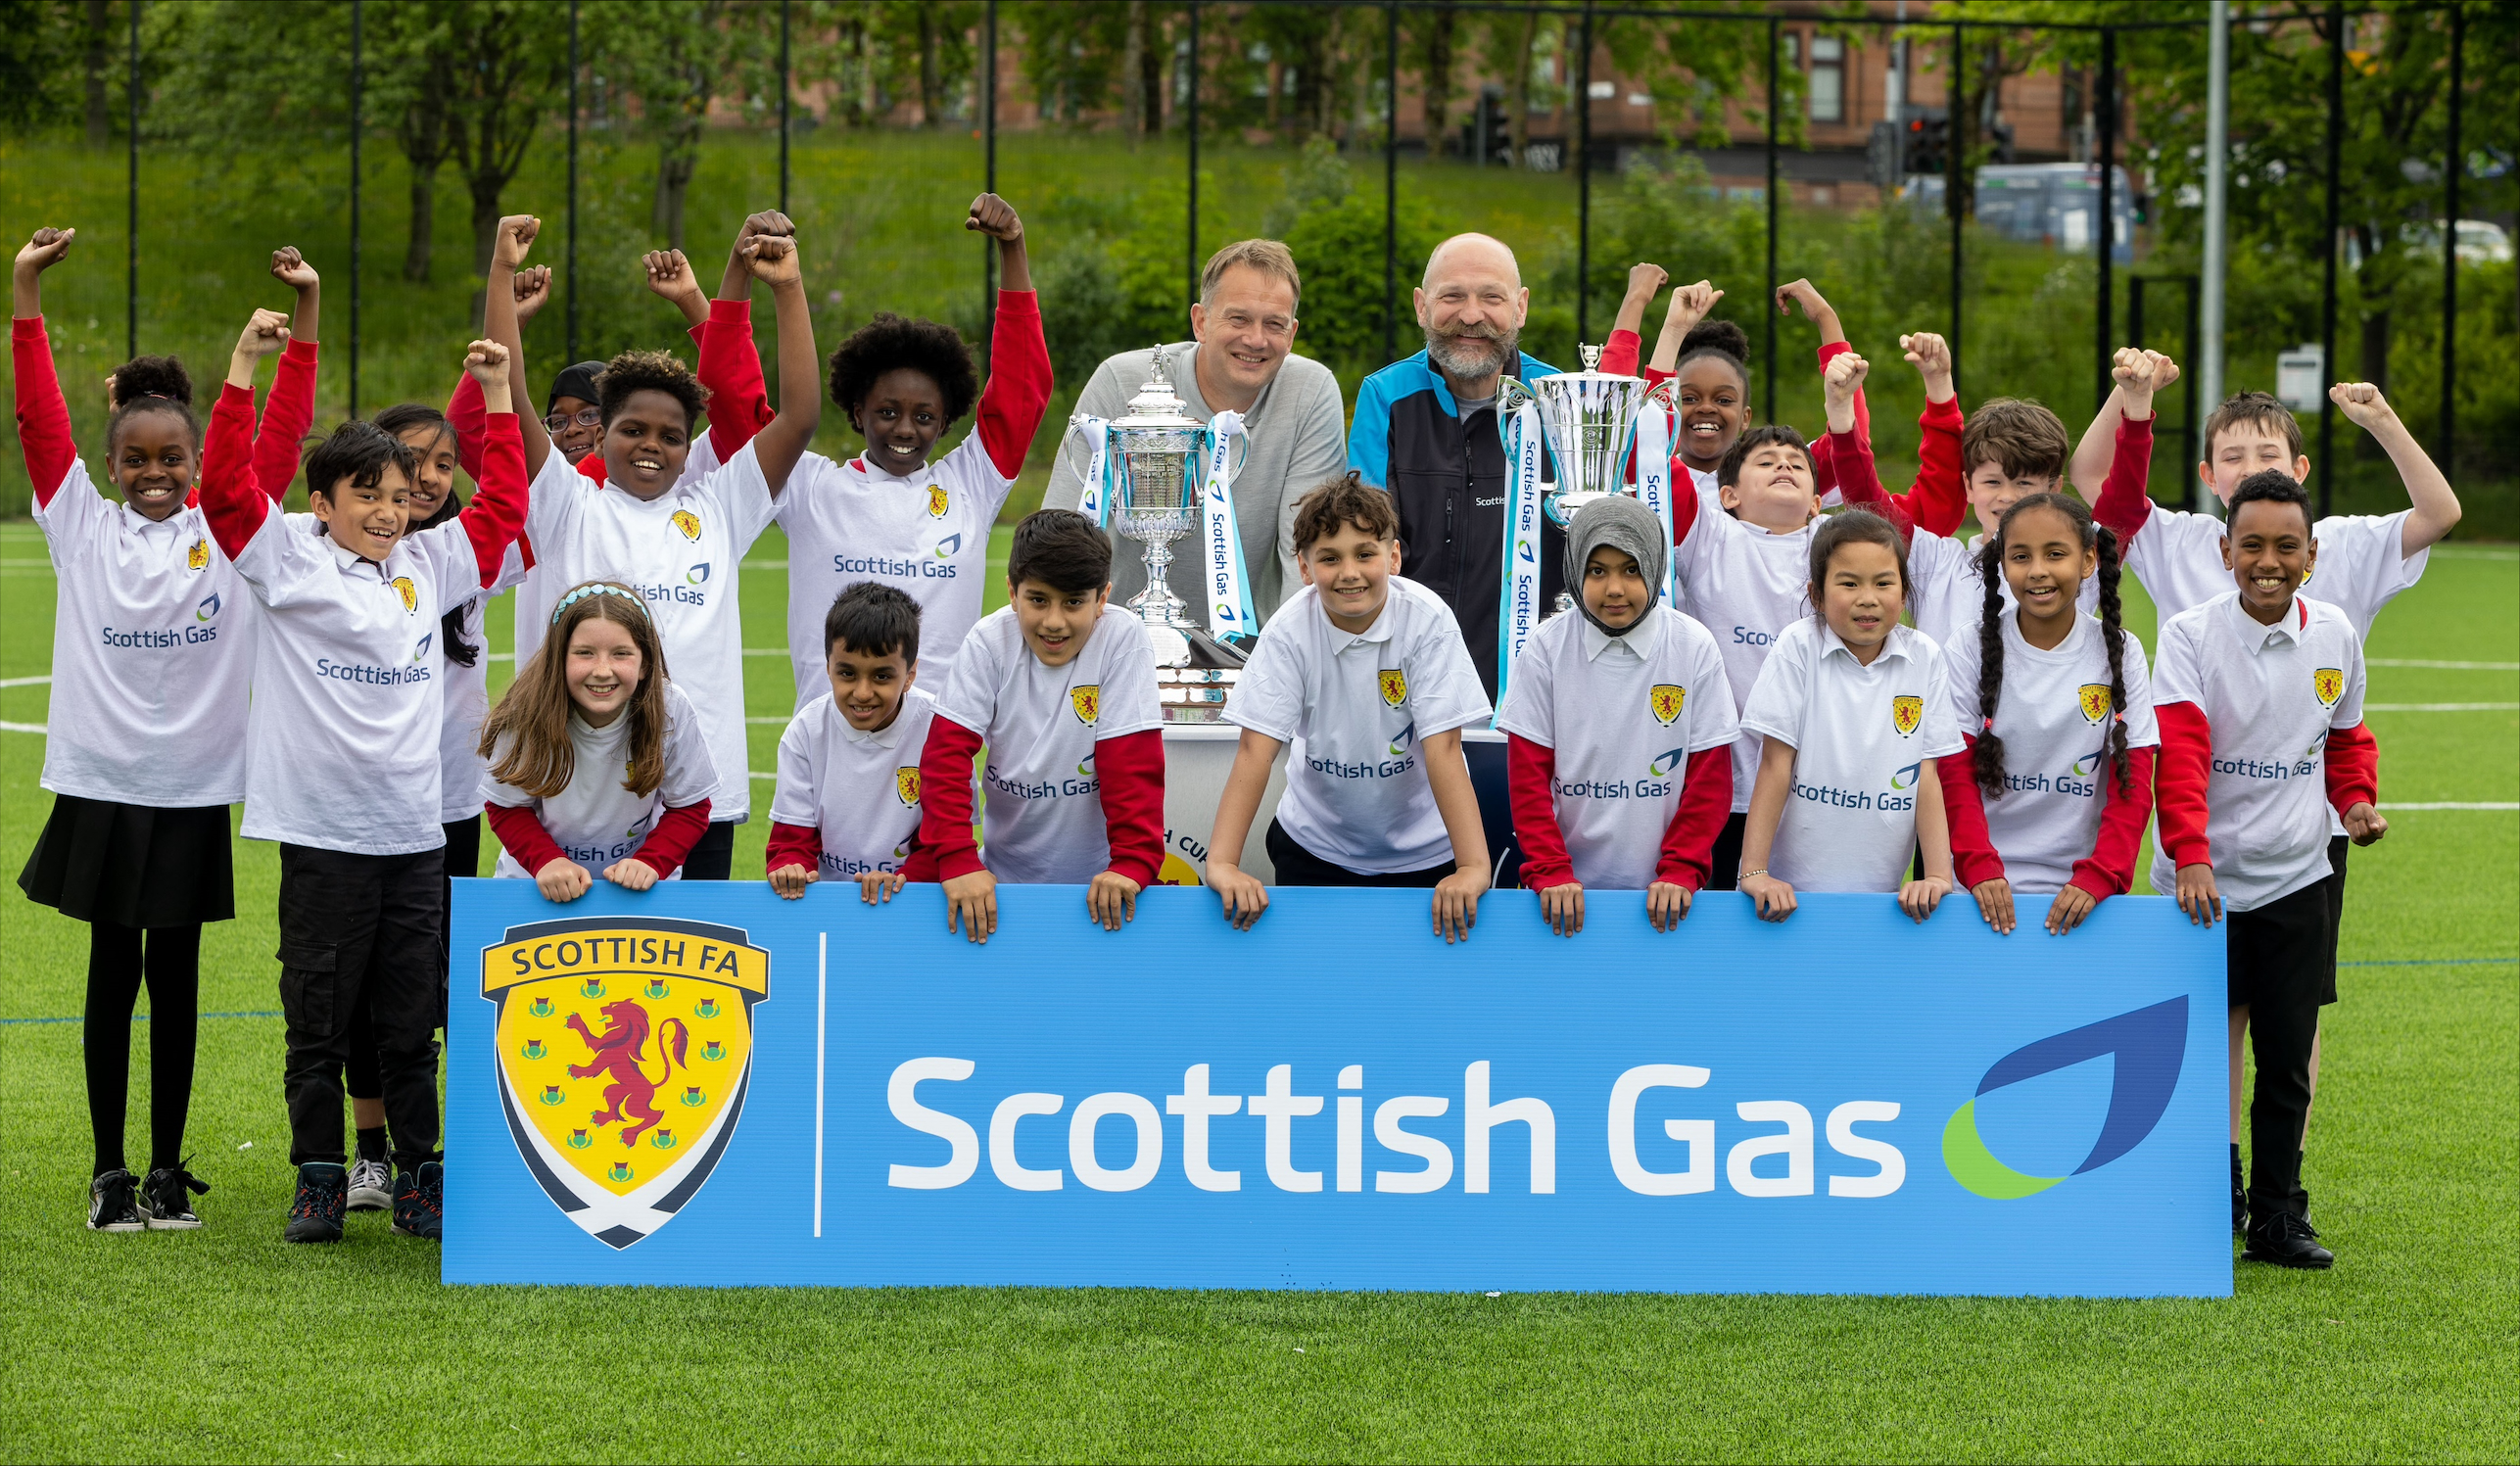 Scottish Gas will sponsor the Scottish Cup